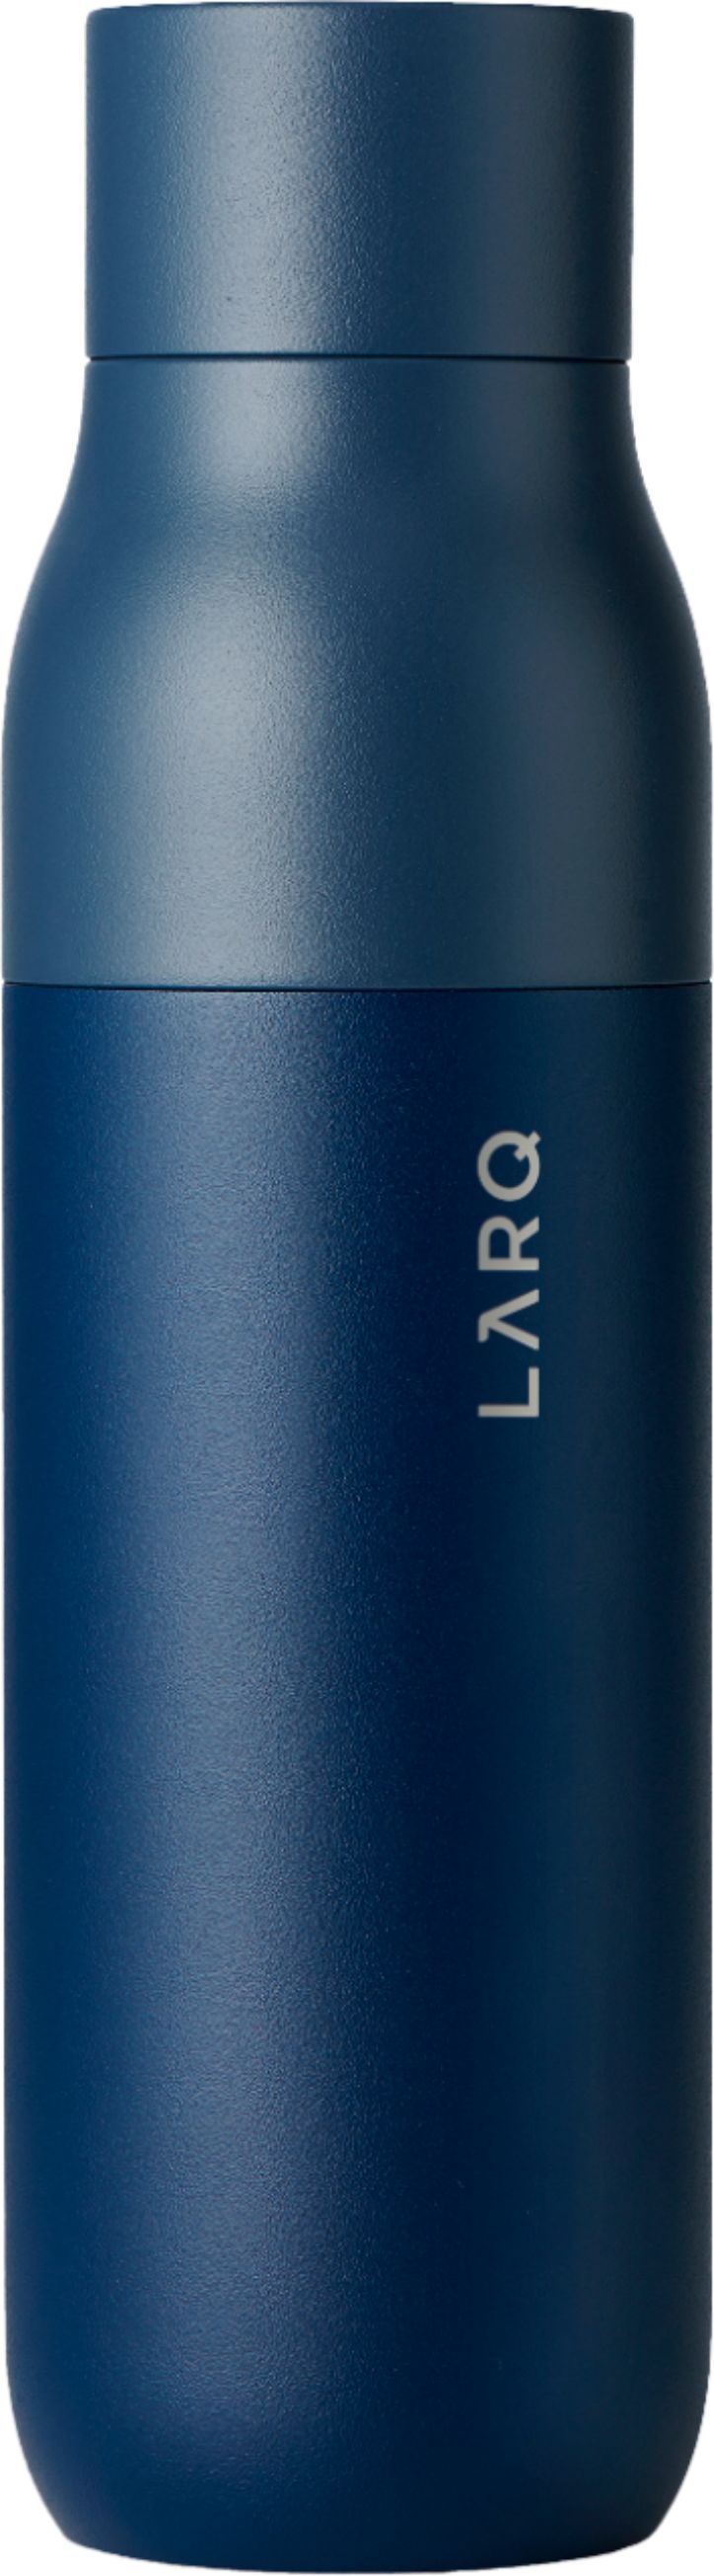 Angle View: LARQ - 17oz. Water Purification Thermal Bottle - Monaco Blue